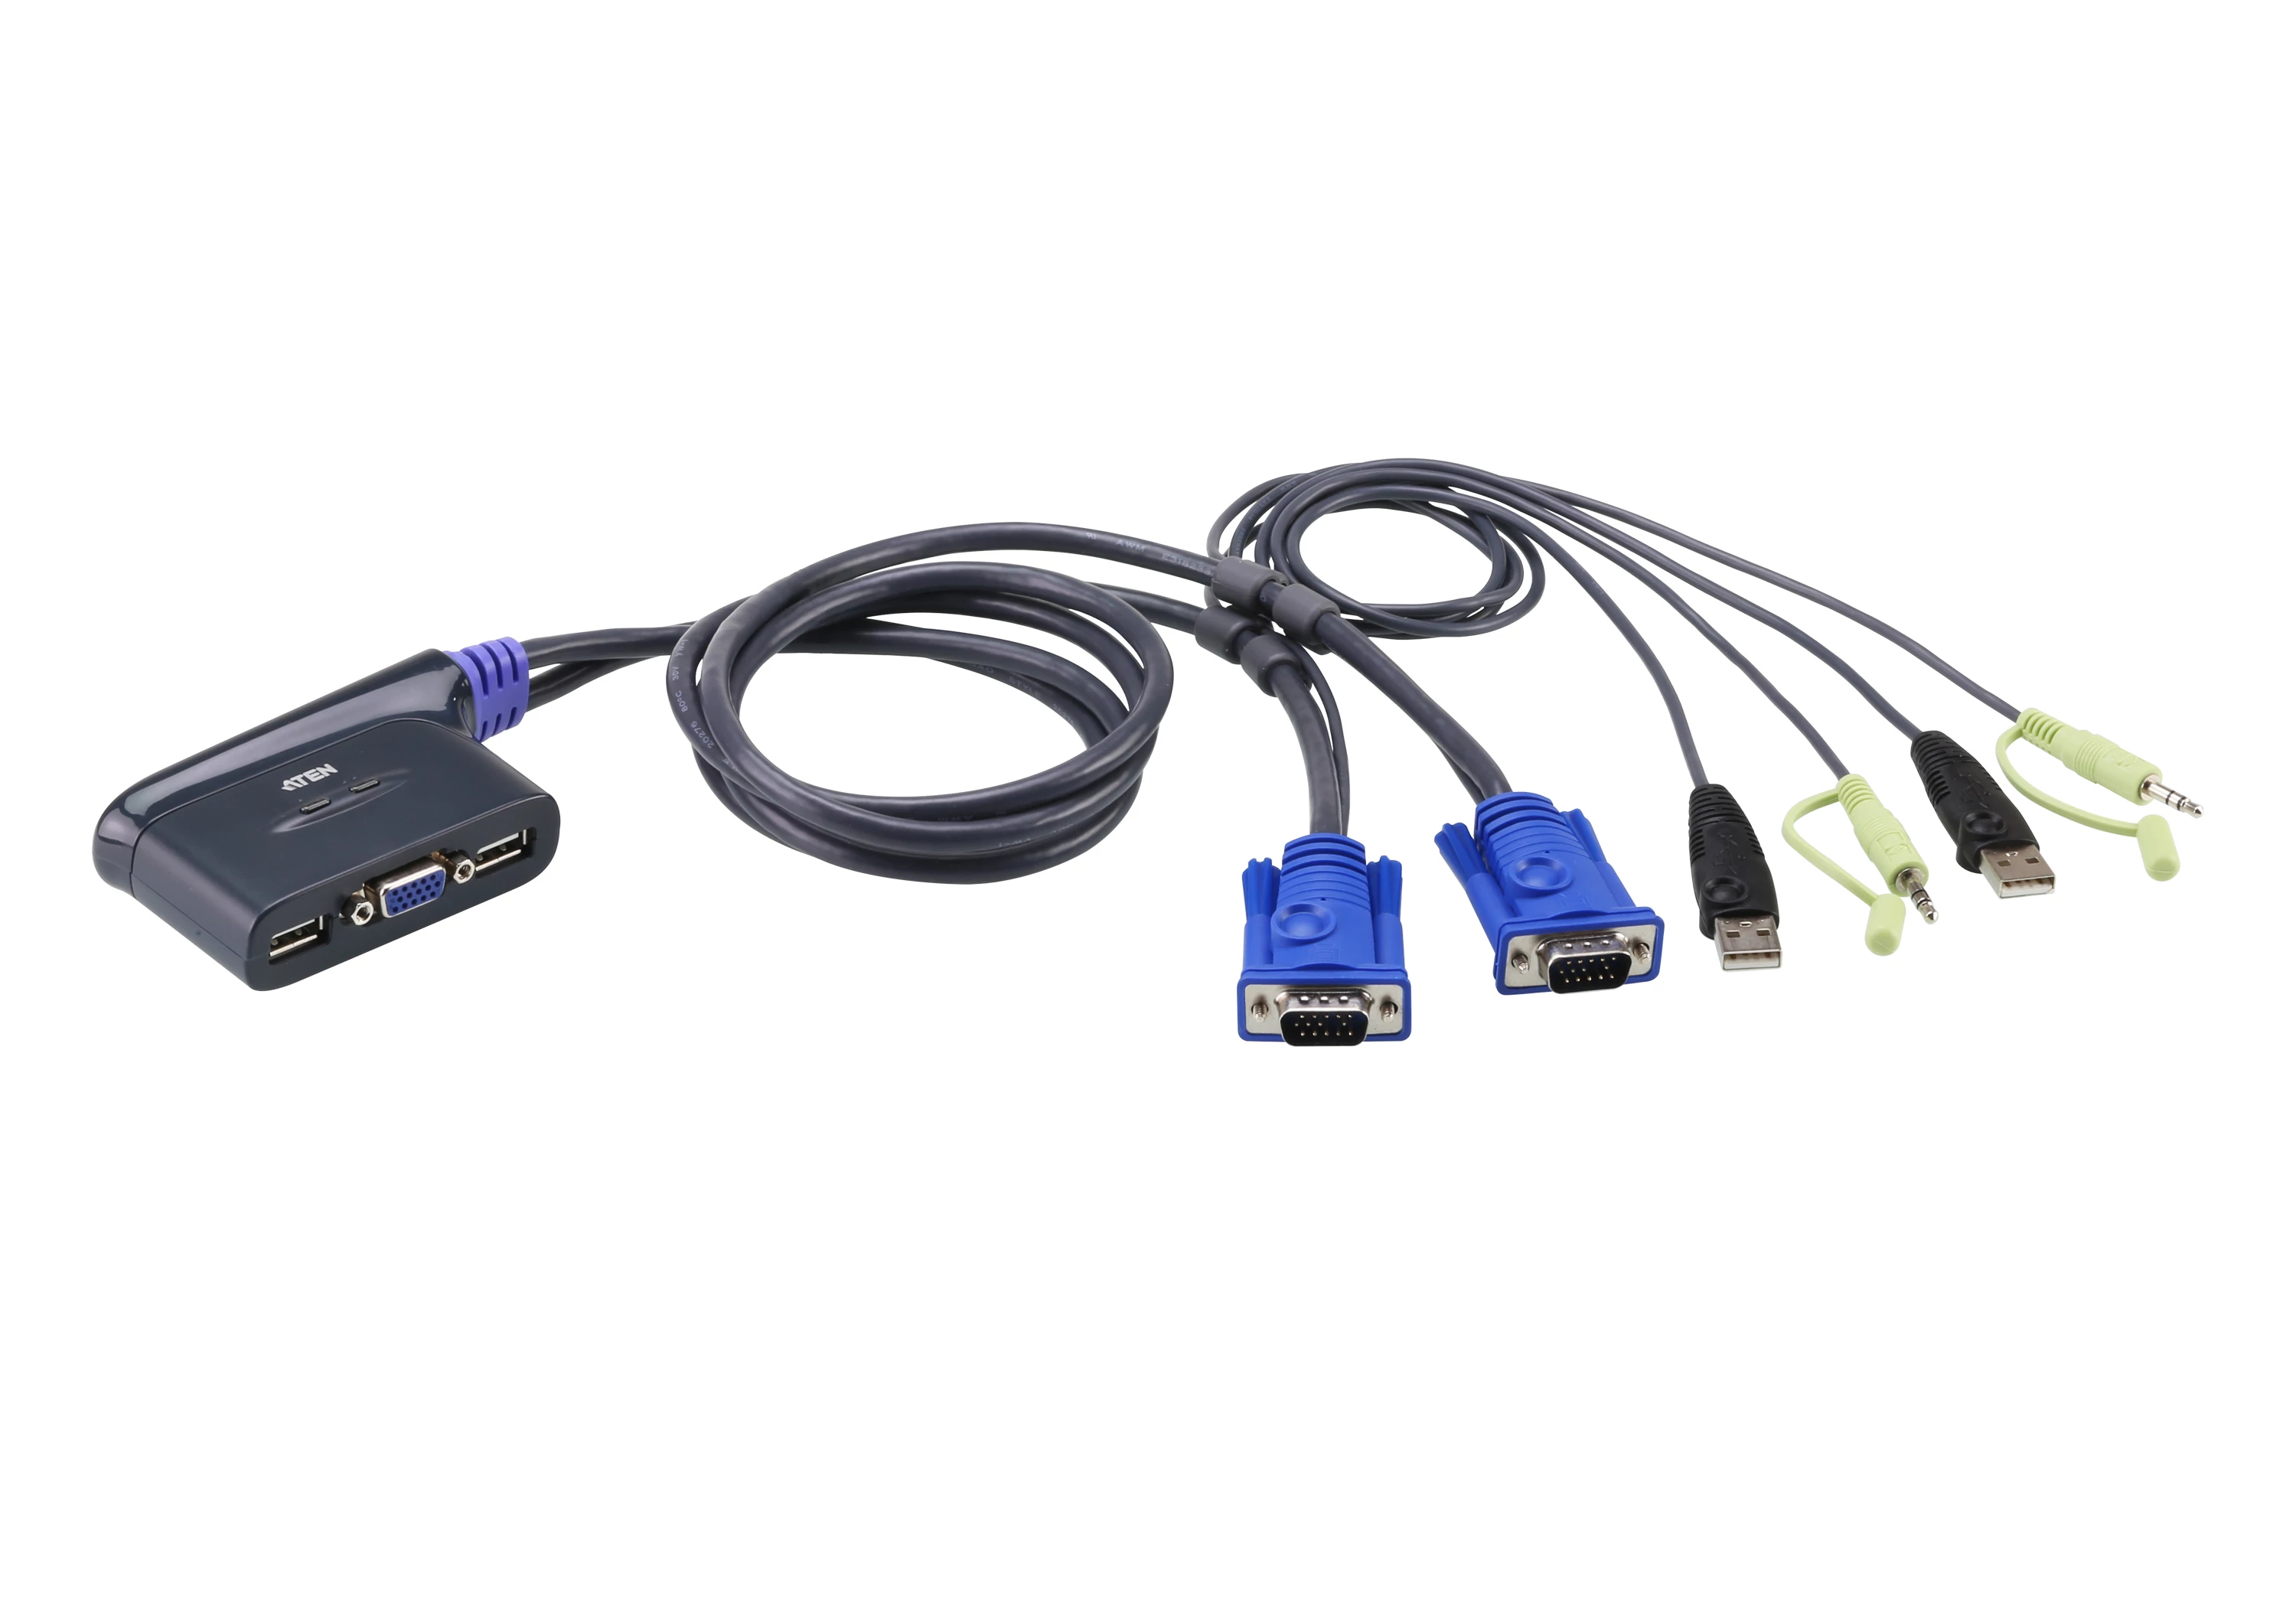 Aten CS62u 2-Port USB VGA/Audio Cable KVM Switch 1.8M